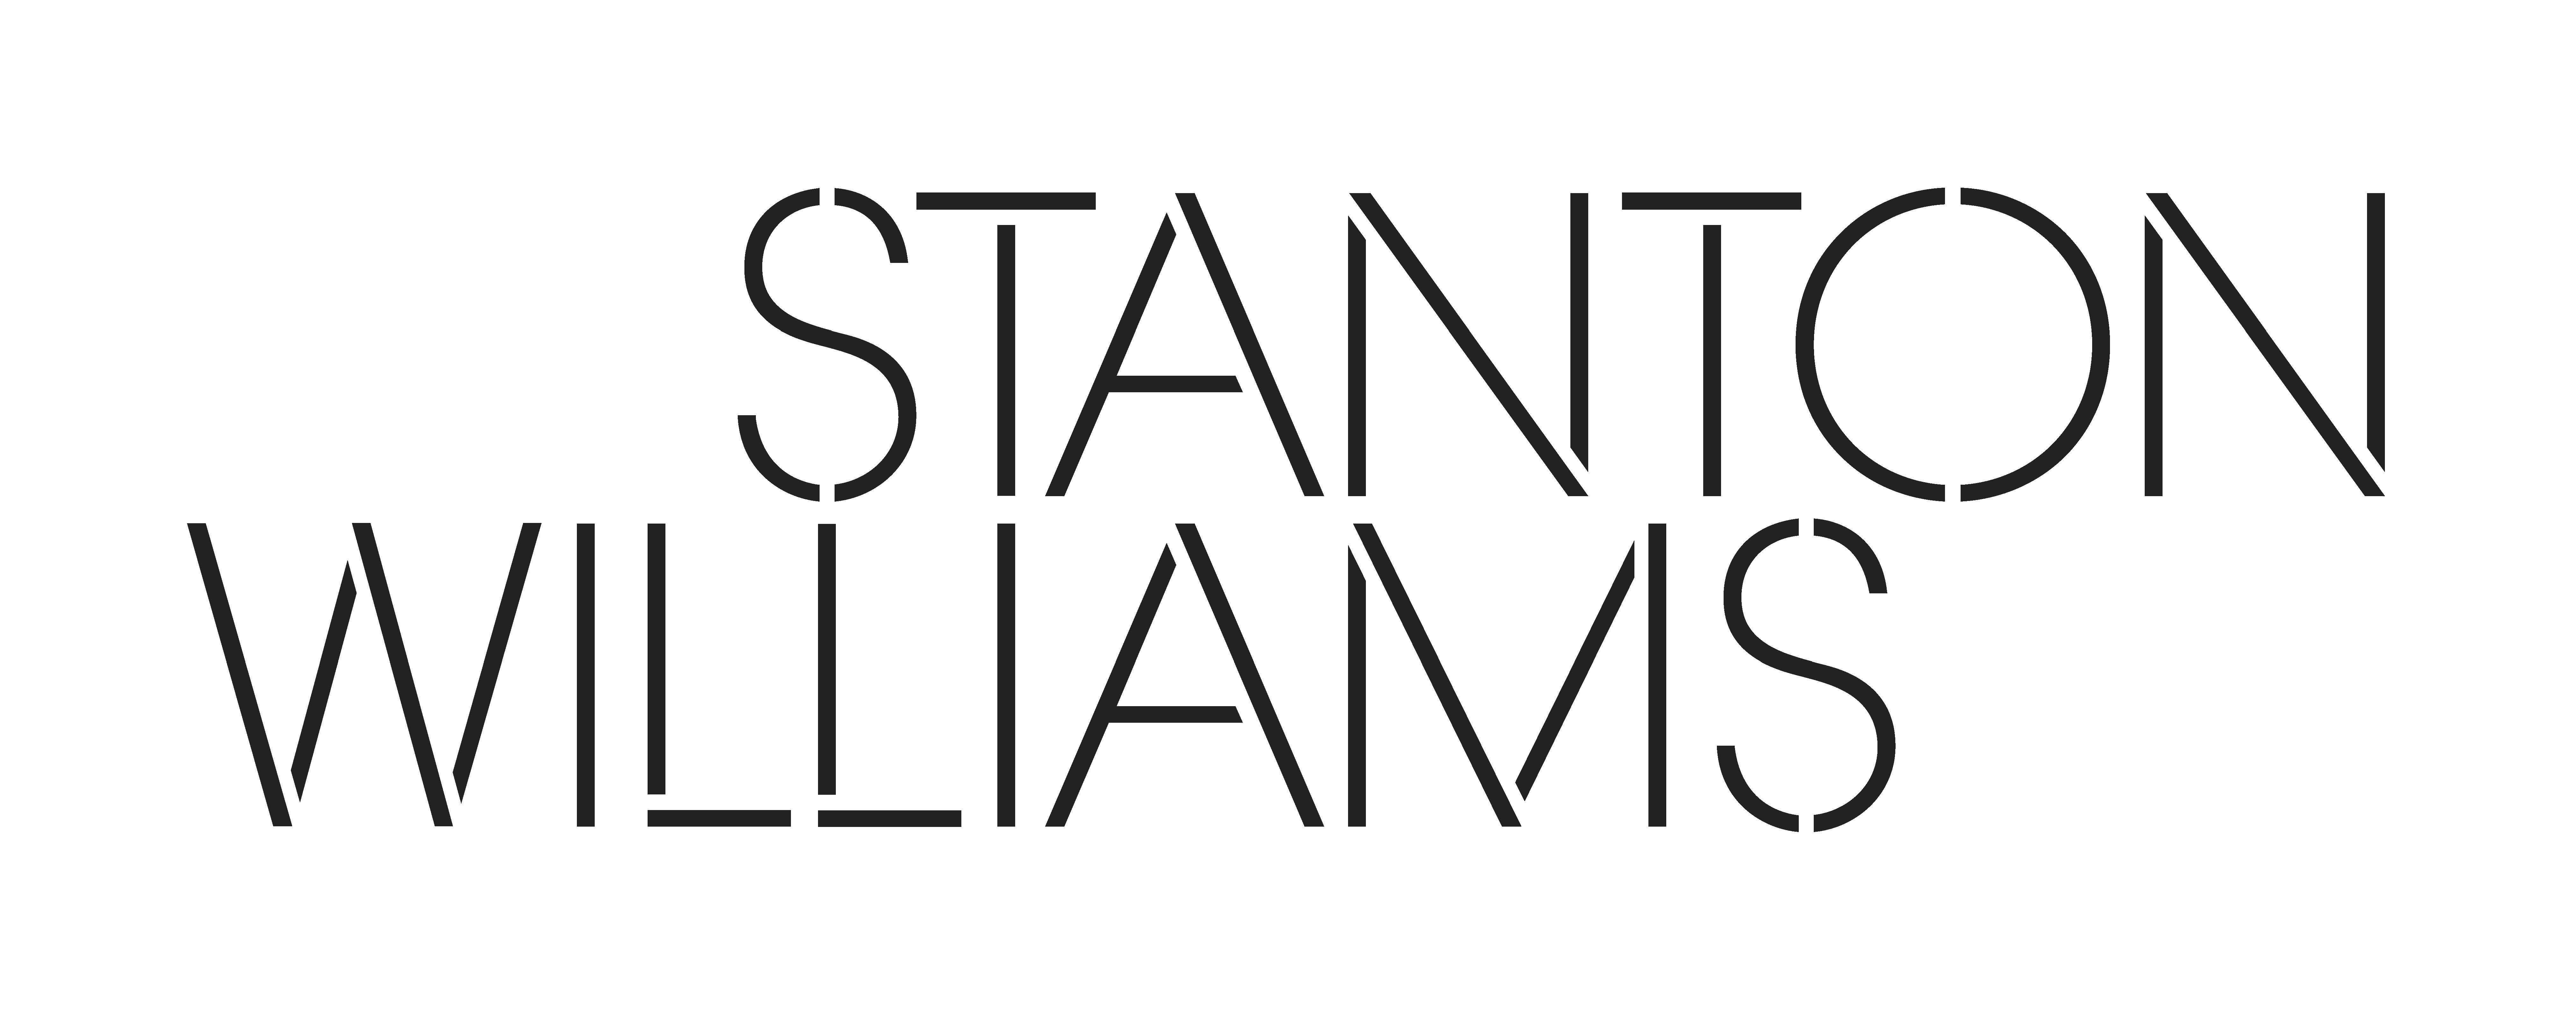 Stanton_Williams_logo